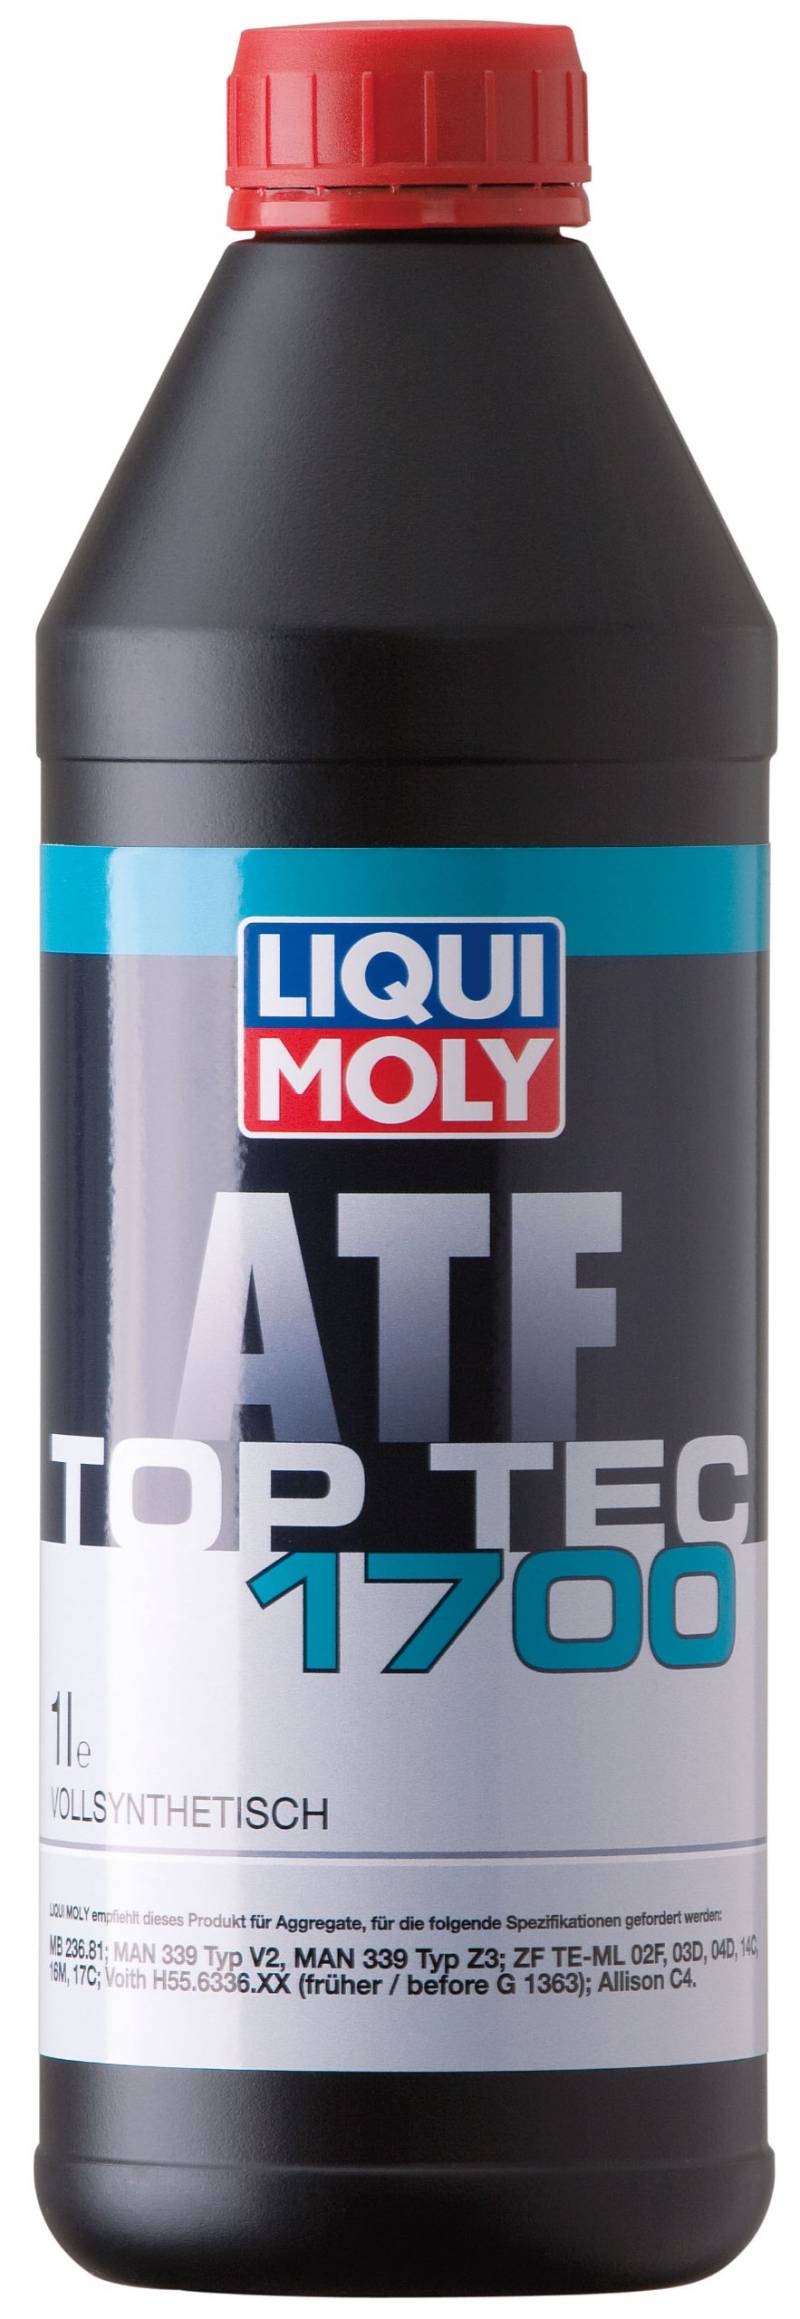 LIQUI MOLY Top Tec ATF 1700 | 1 L | Getriebeöl | Hydrauliköl | Art.-Nr.: 3663 von Liqui Moly